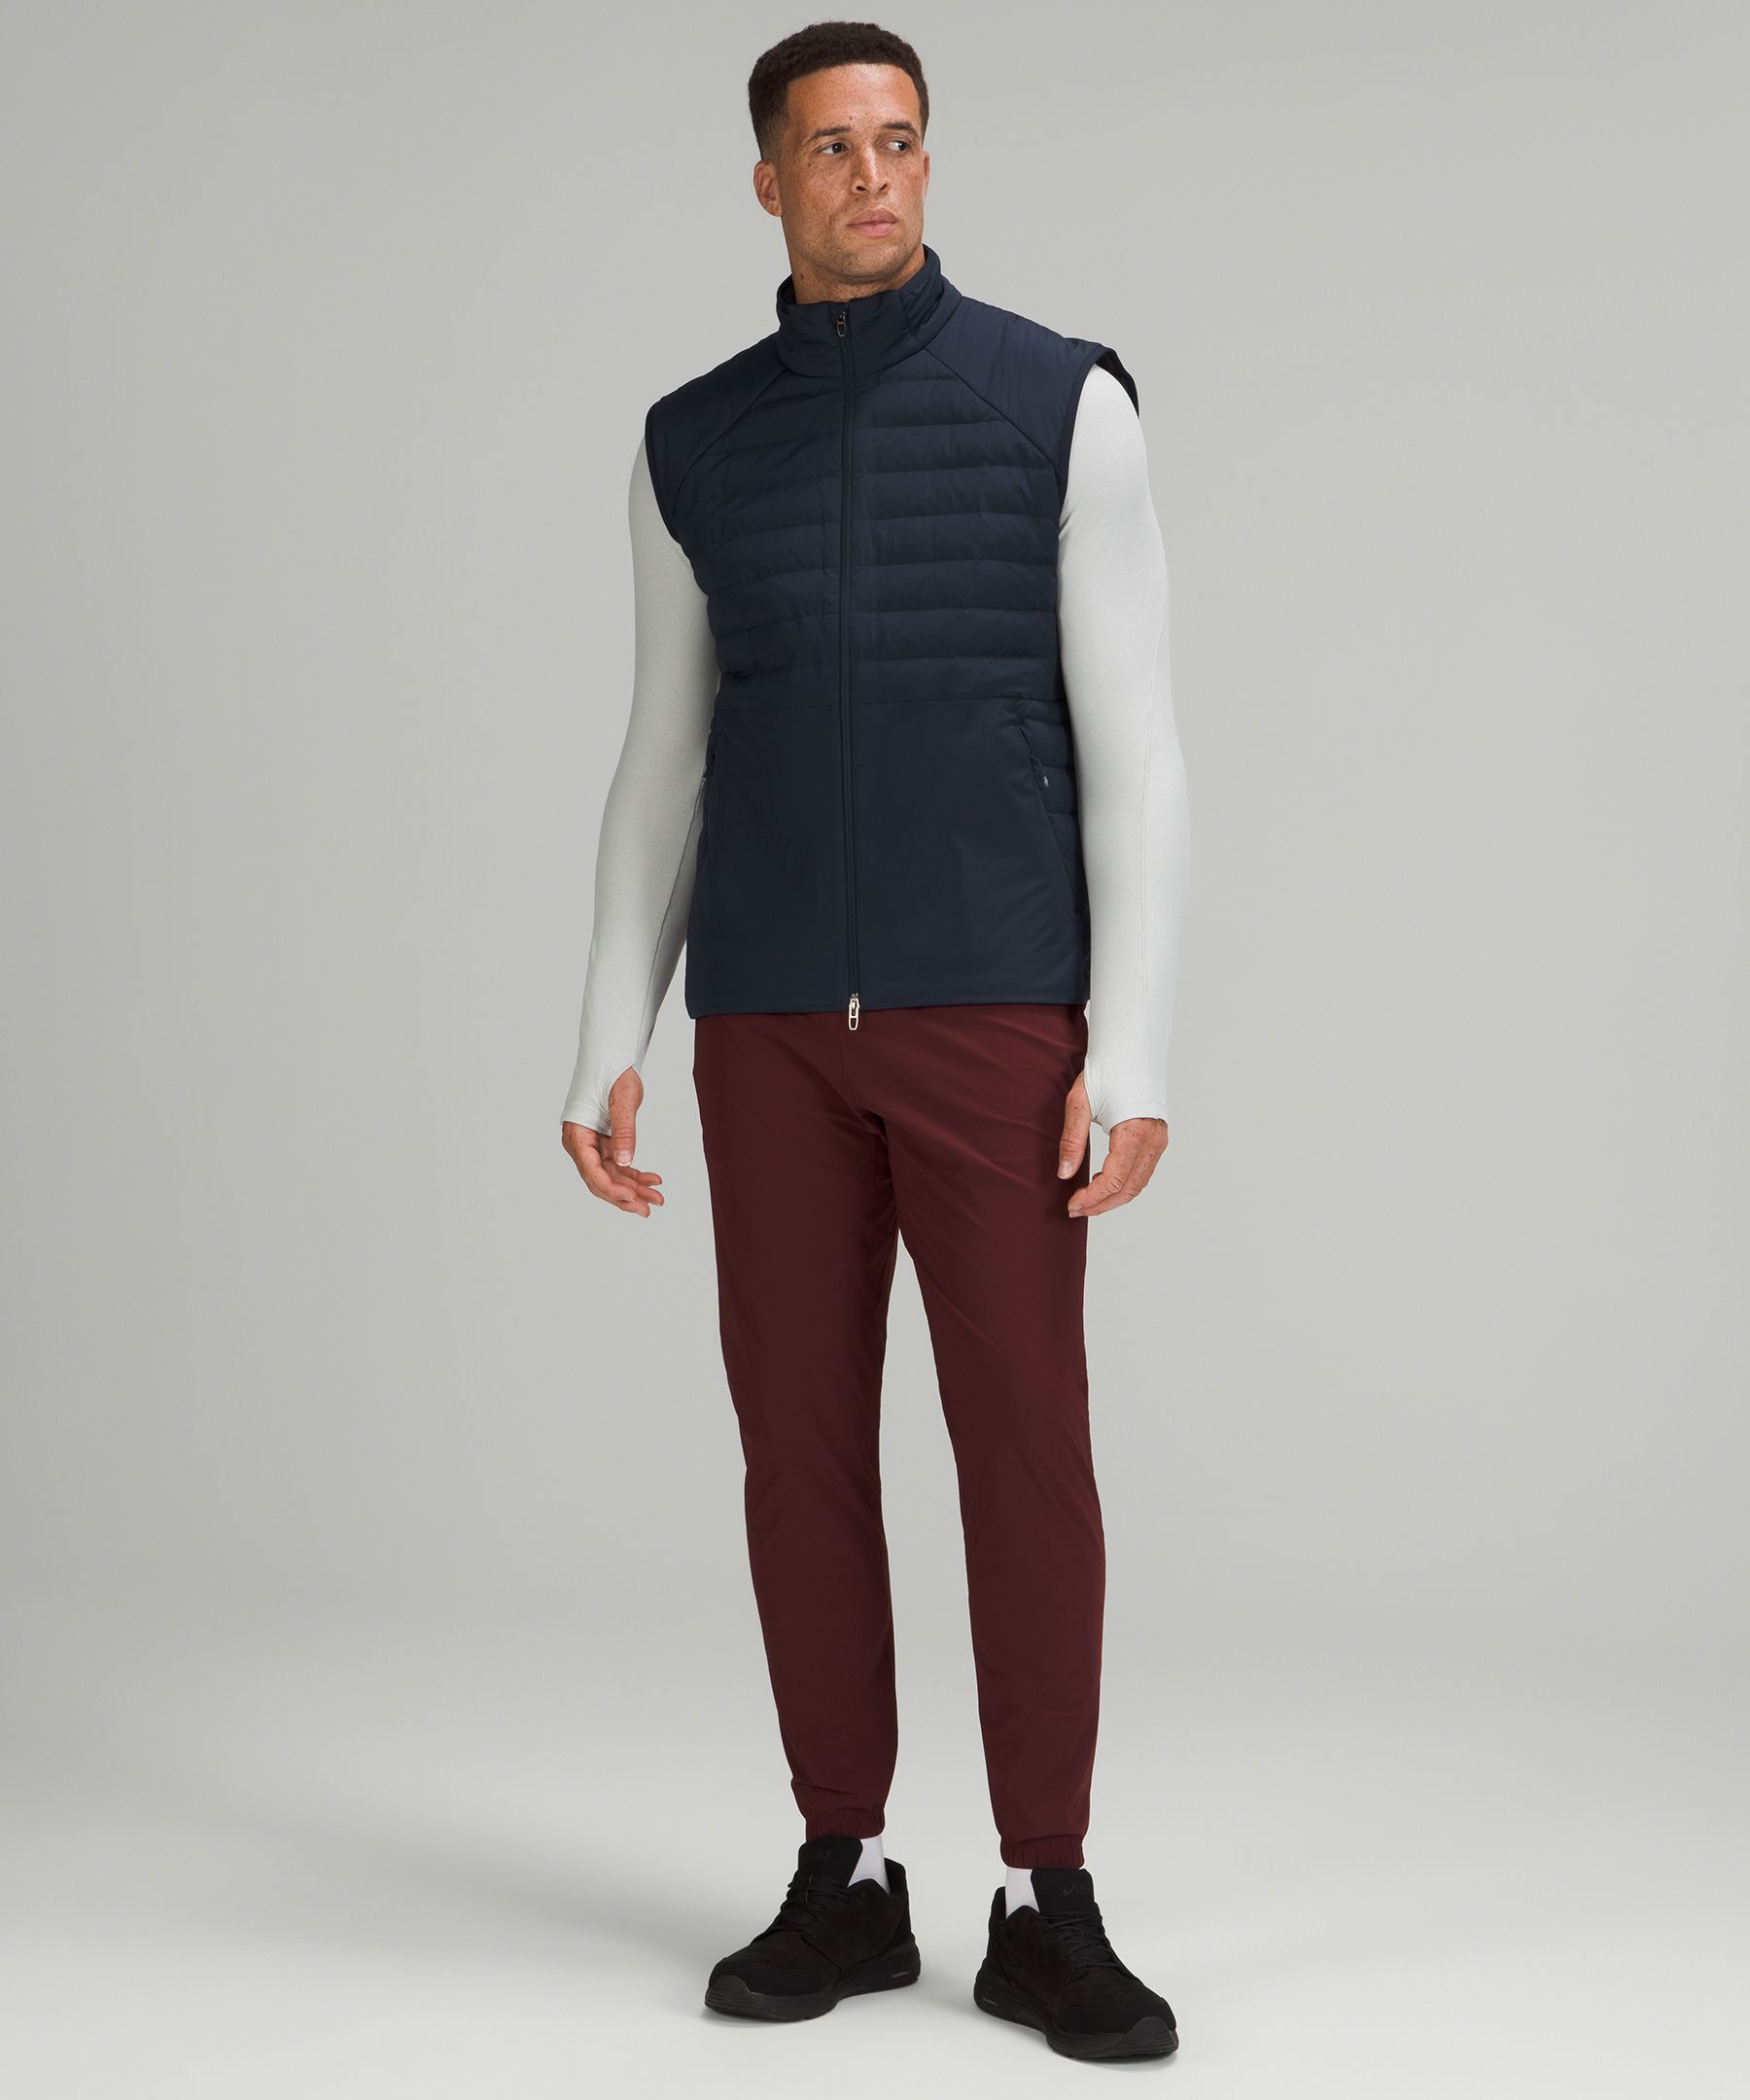 Down for It All Vest | Men's Coats & Jackets | lululemon